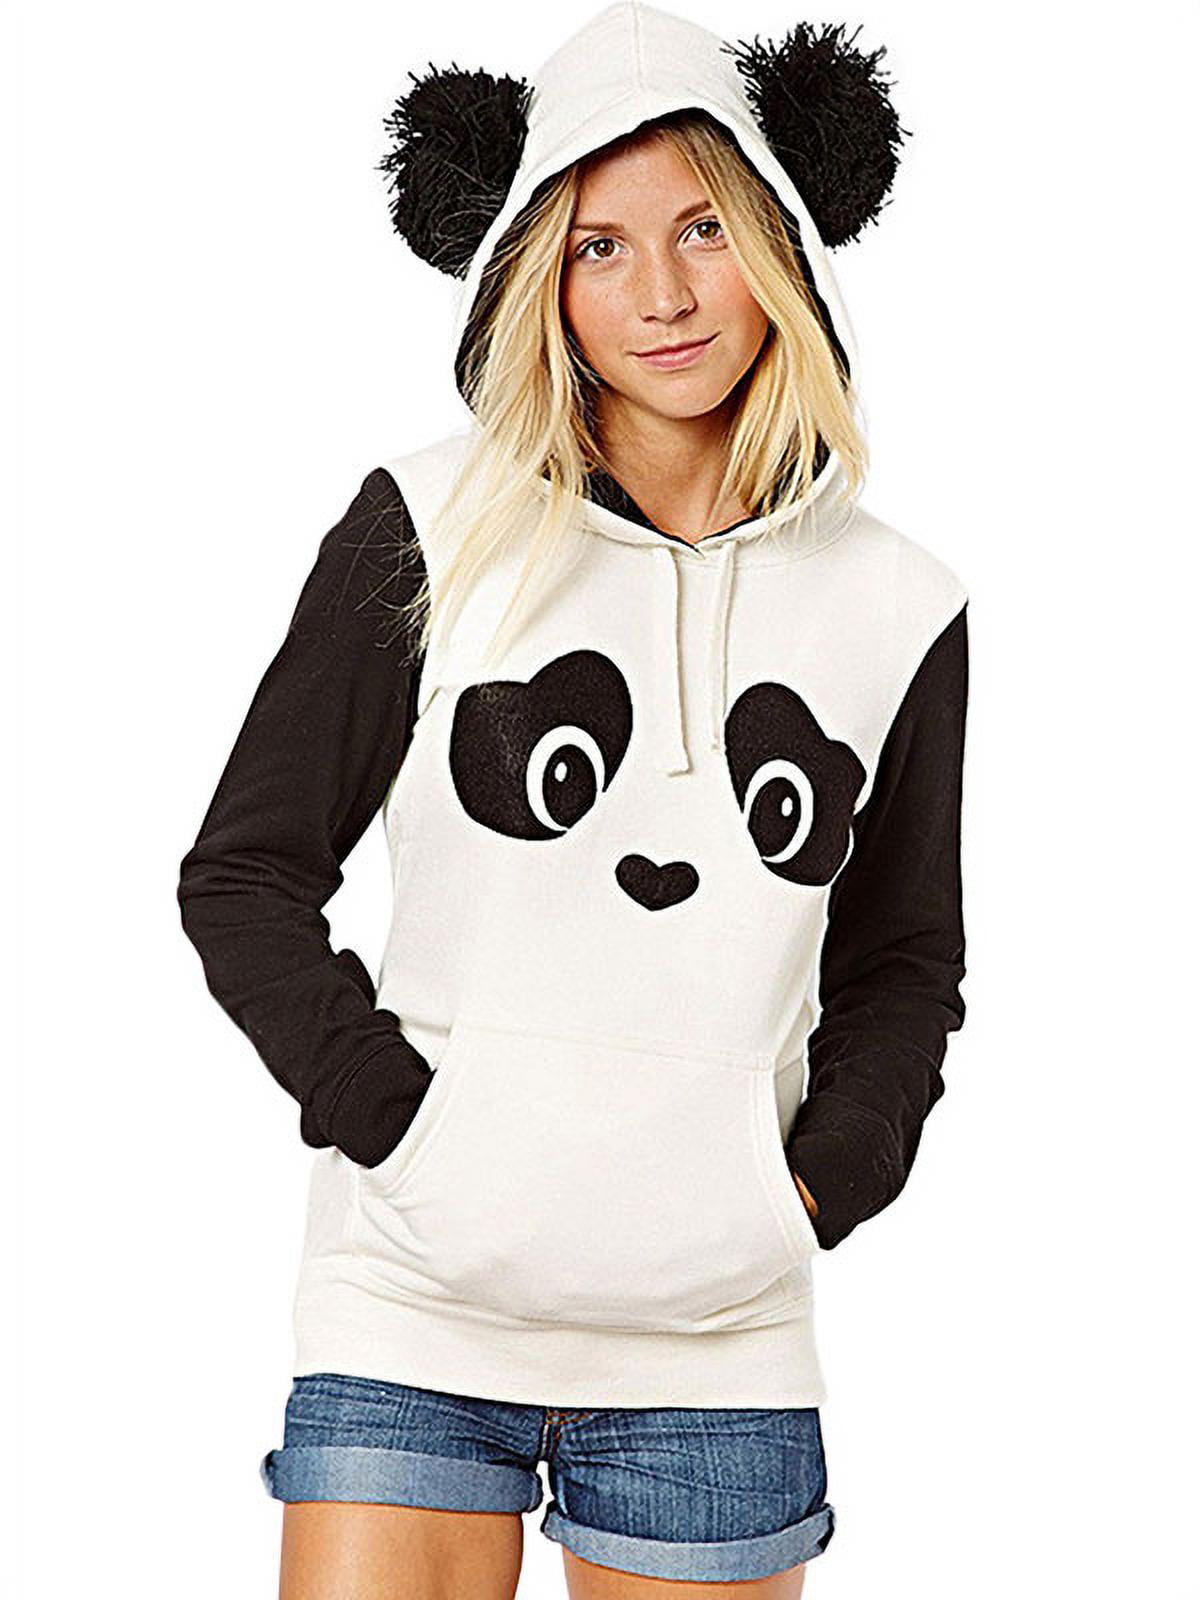 Pandapang Womens Simple Hoodies Casual Pullover Long Sleeve Sweatshirts